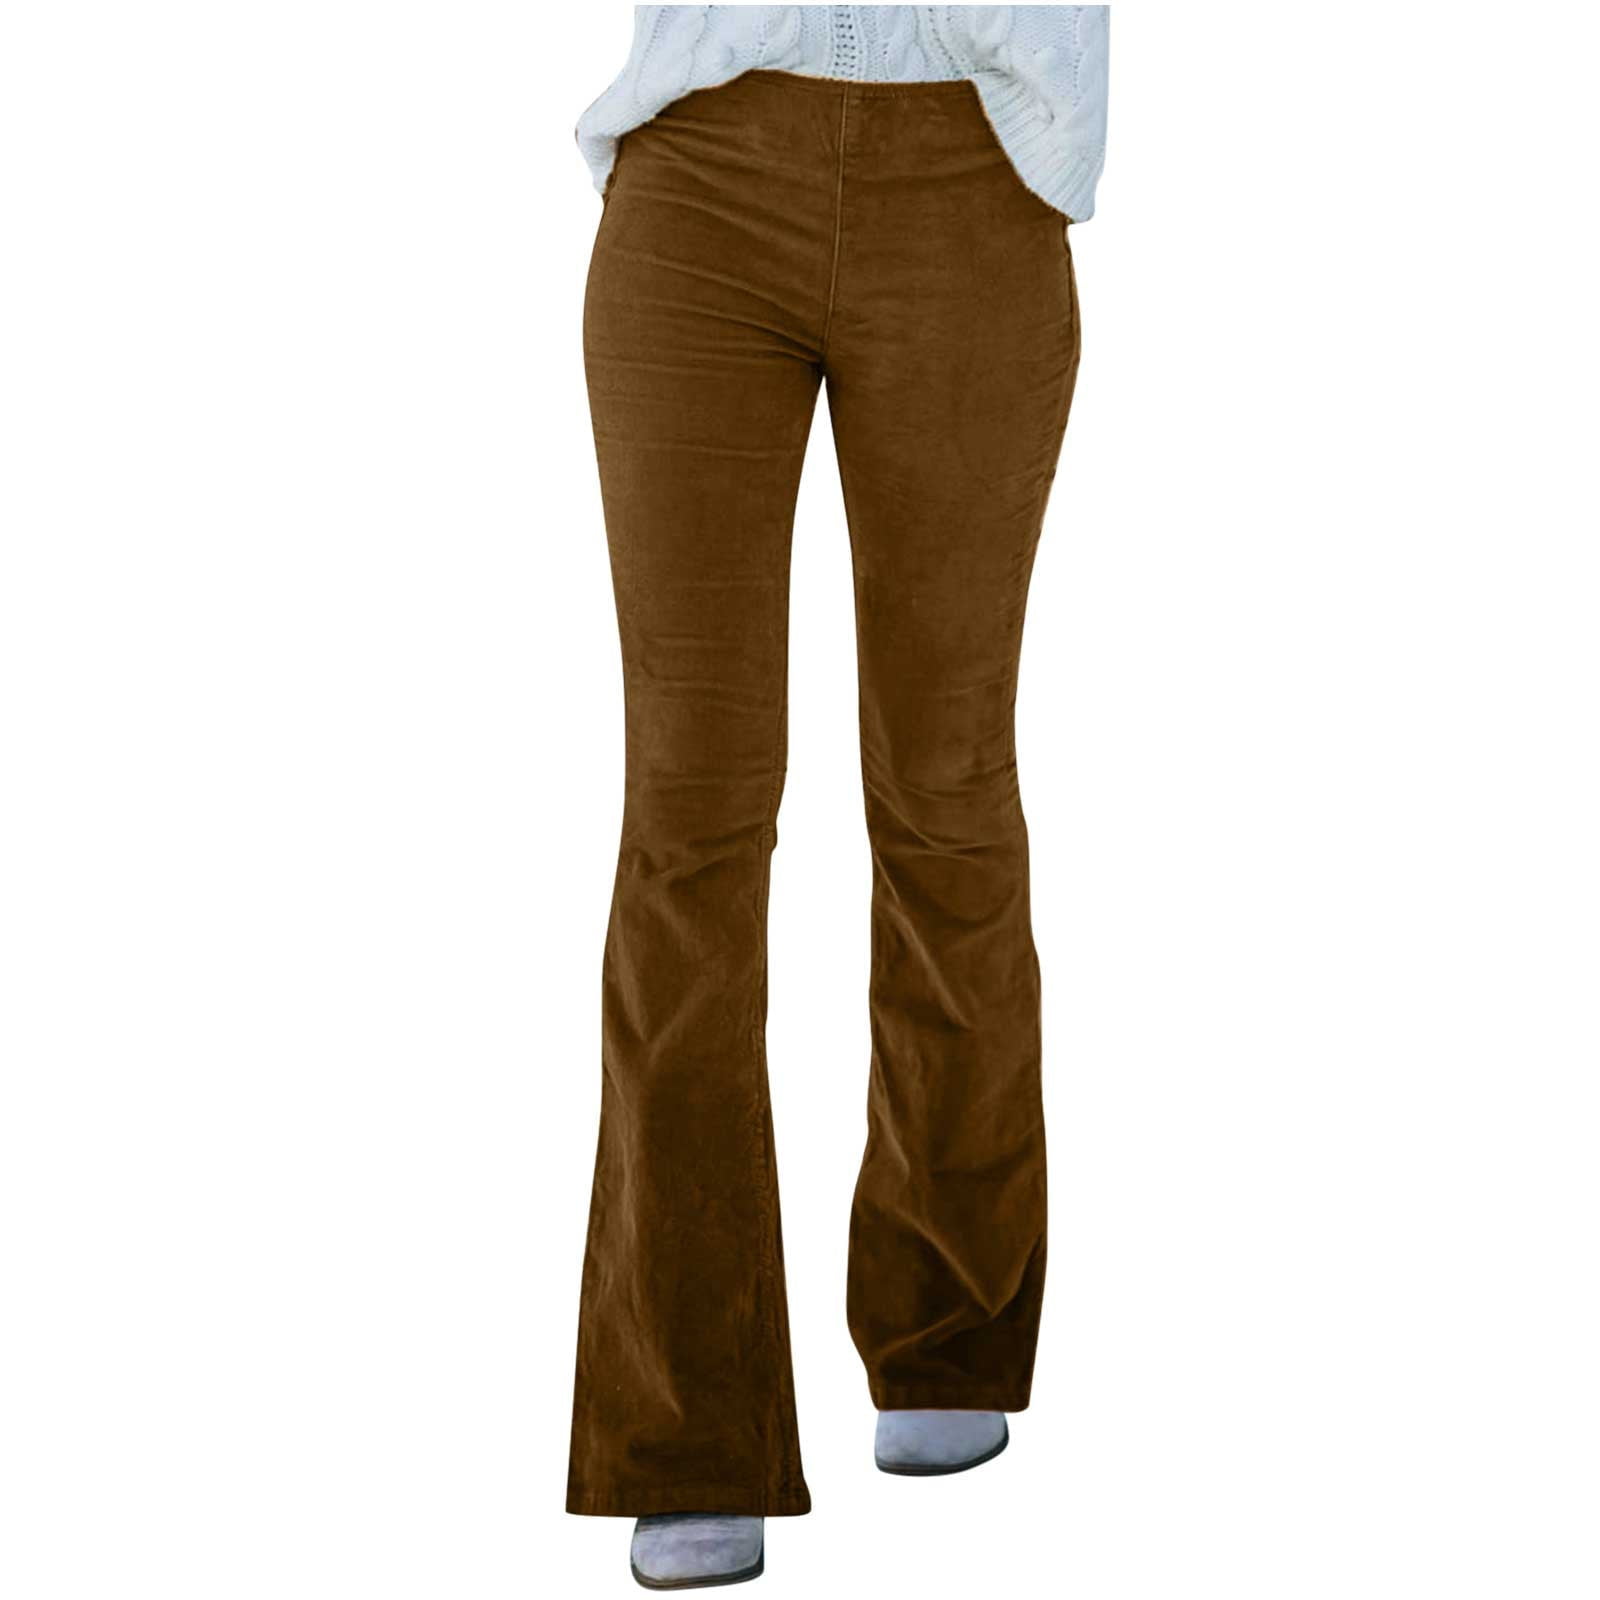 Buy Breniney Bootcut Corduroy Pants for Men Ladies Elastic Waist Pants  Velvet High Waisted Pants Men Cargo Pants with Pockets Brown at Amazonin